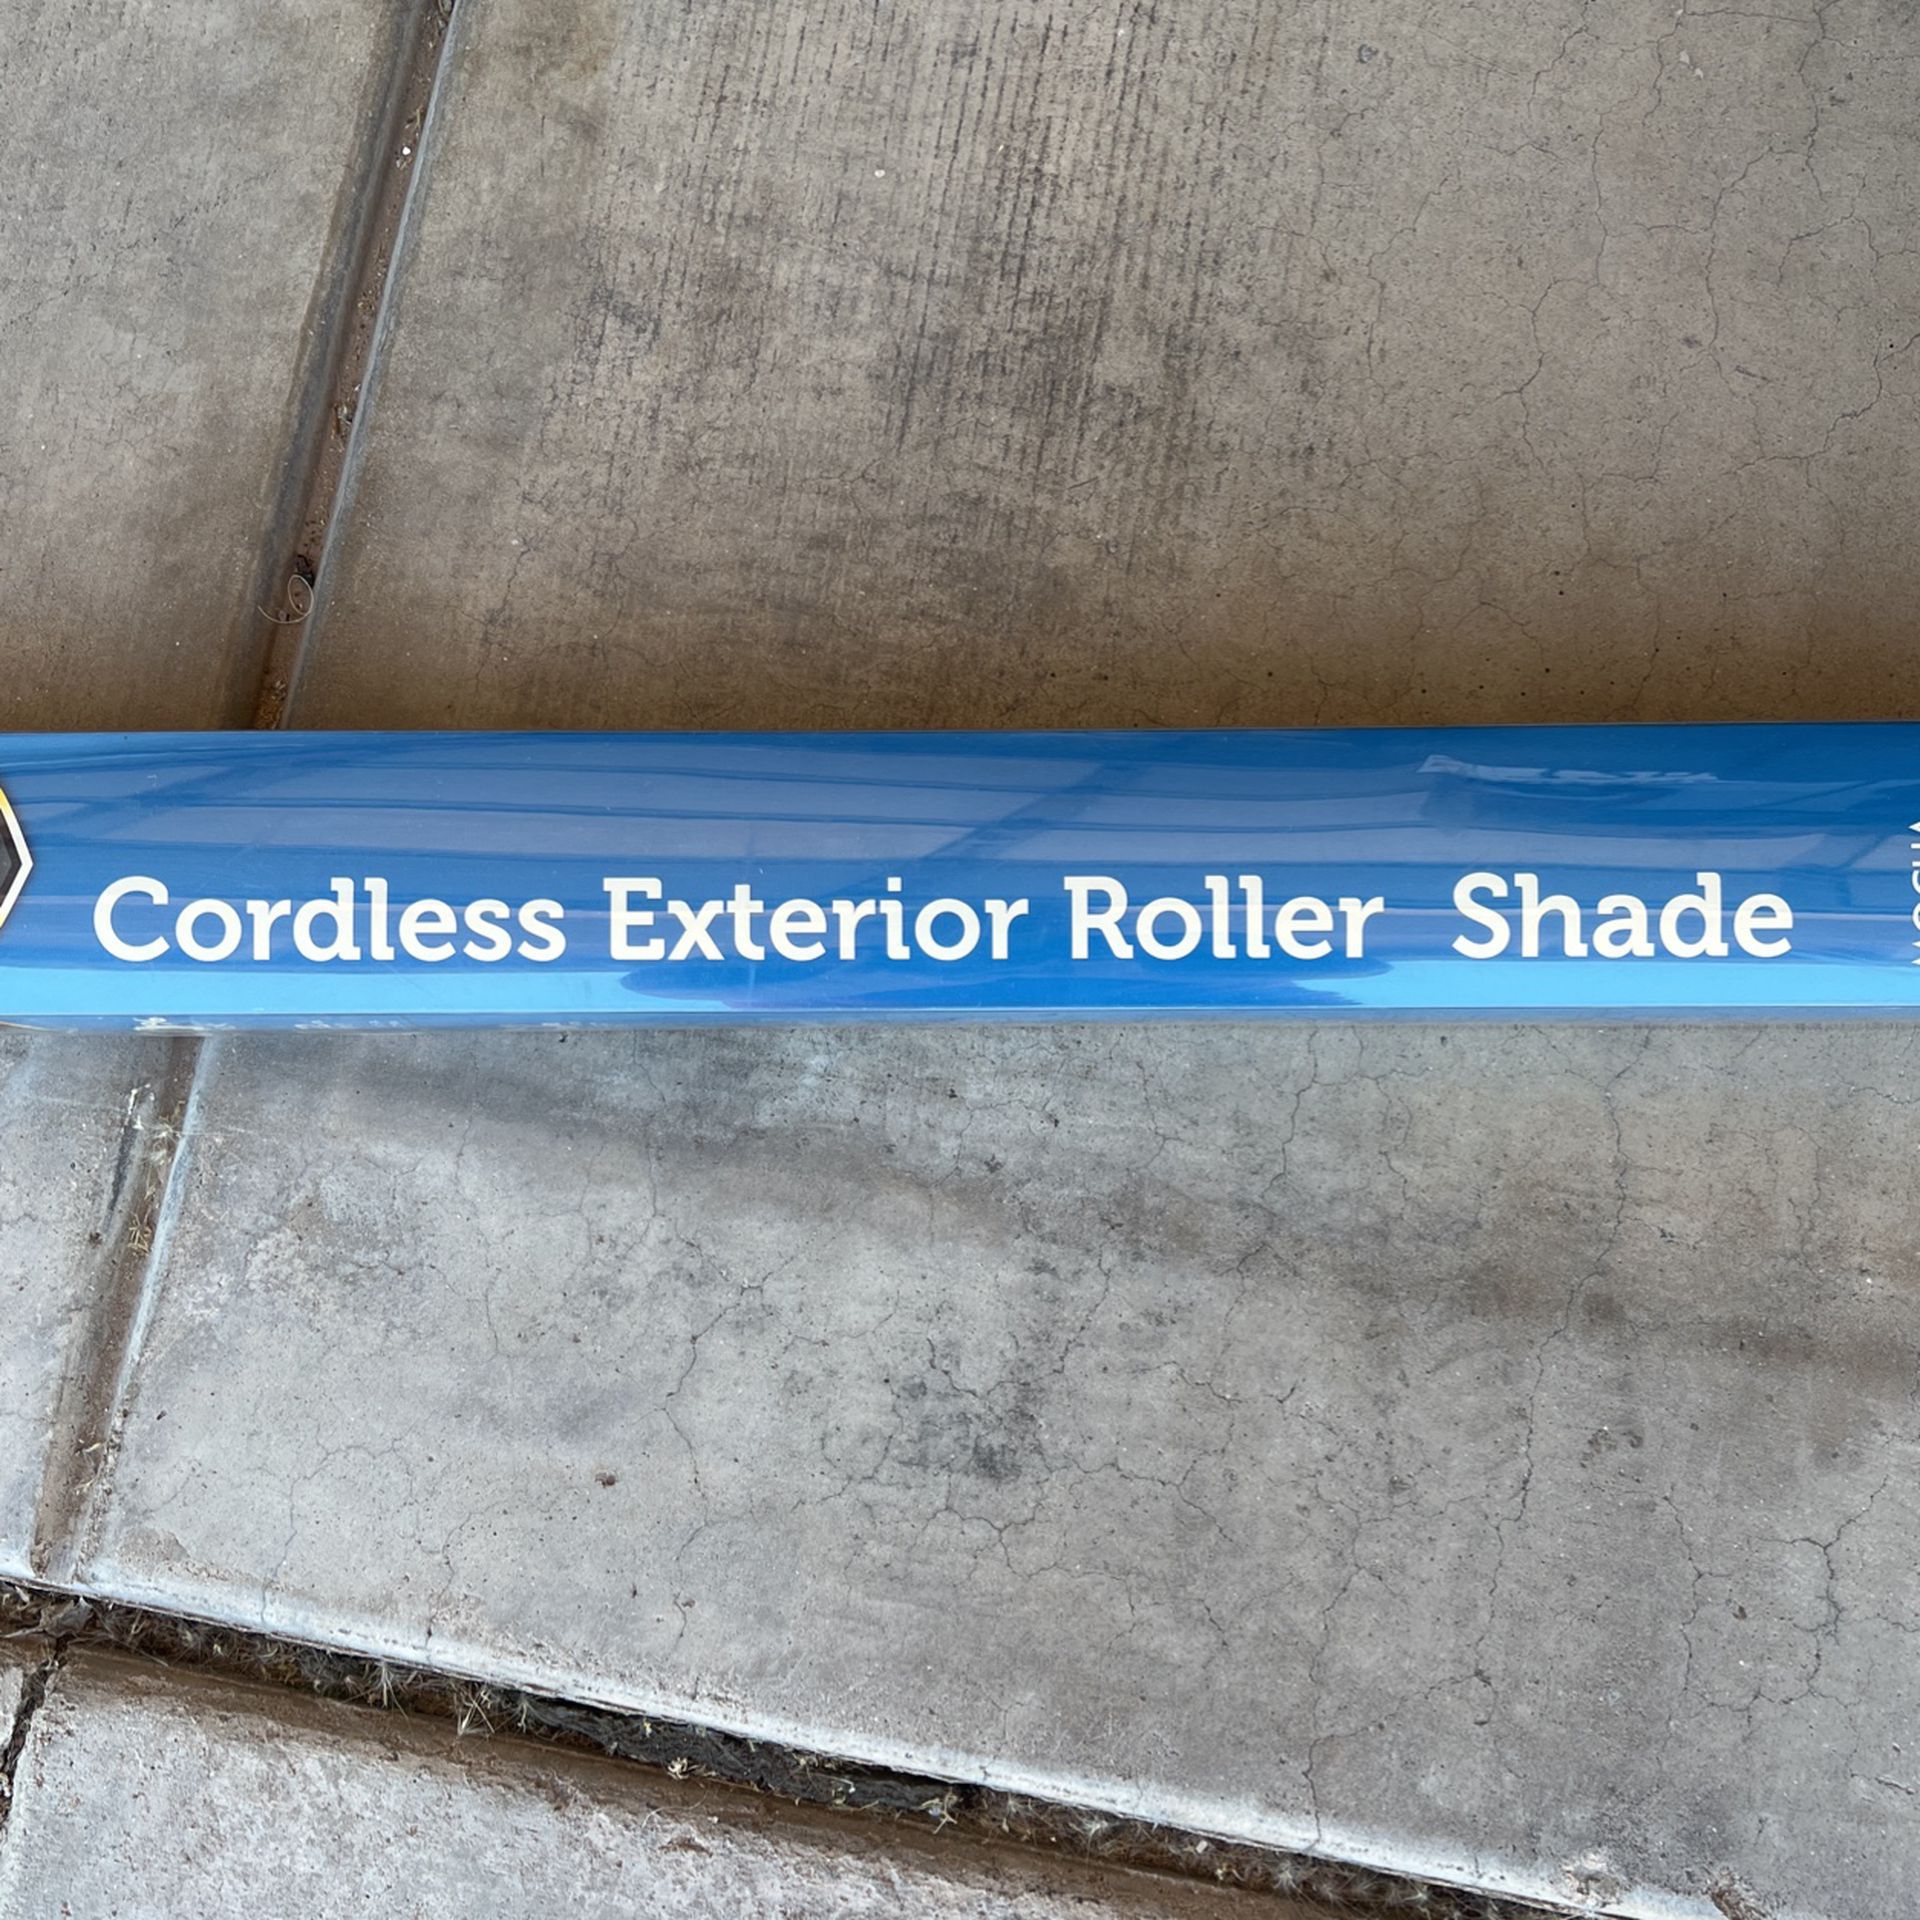 Cordless Exterior Roller Shade